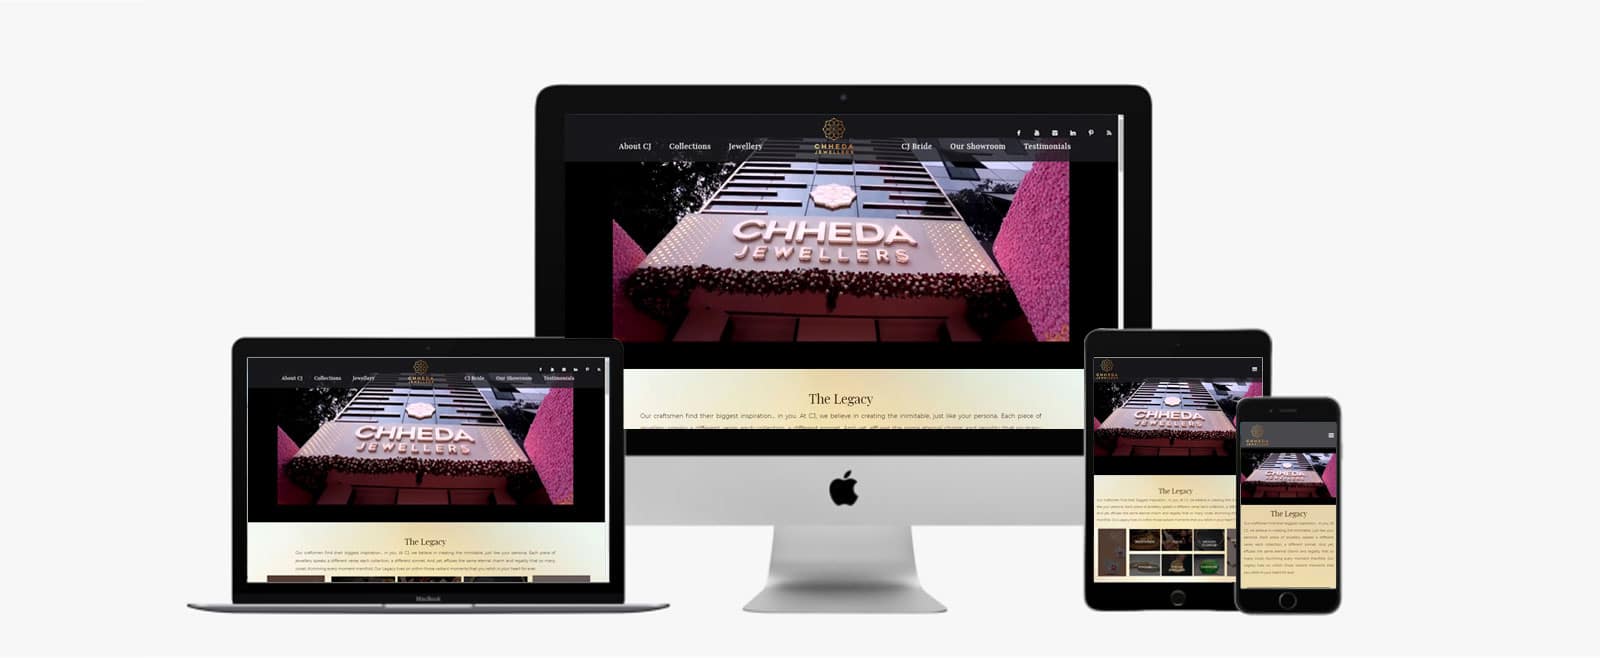 top web banner develop chheda